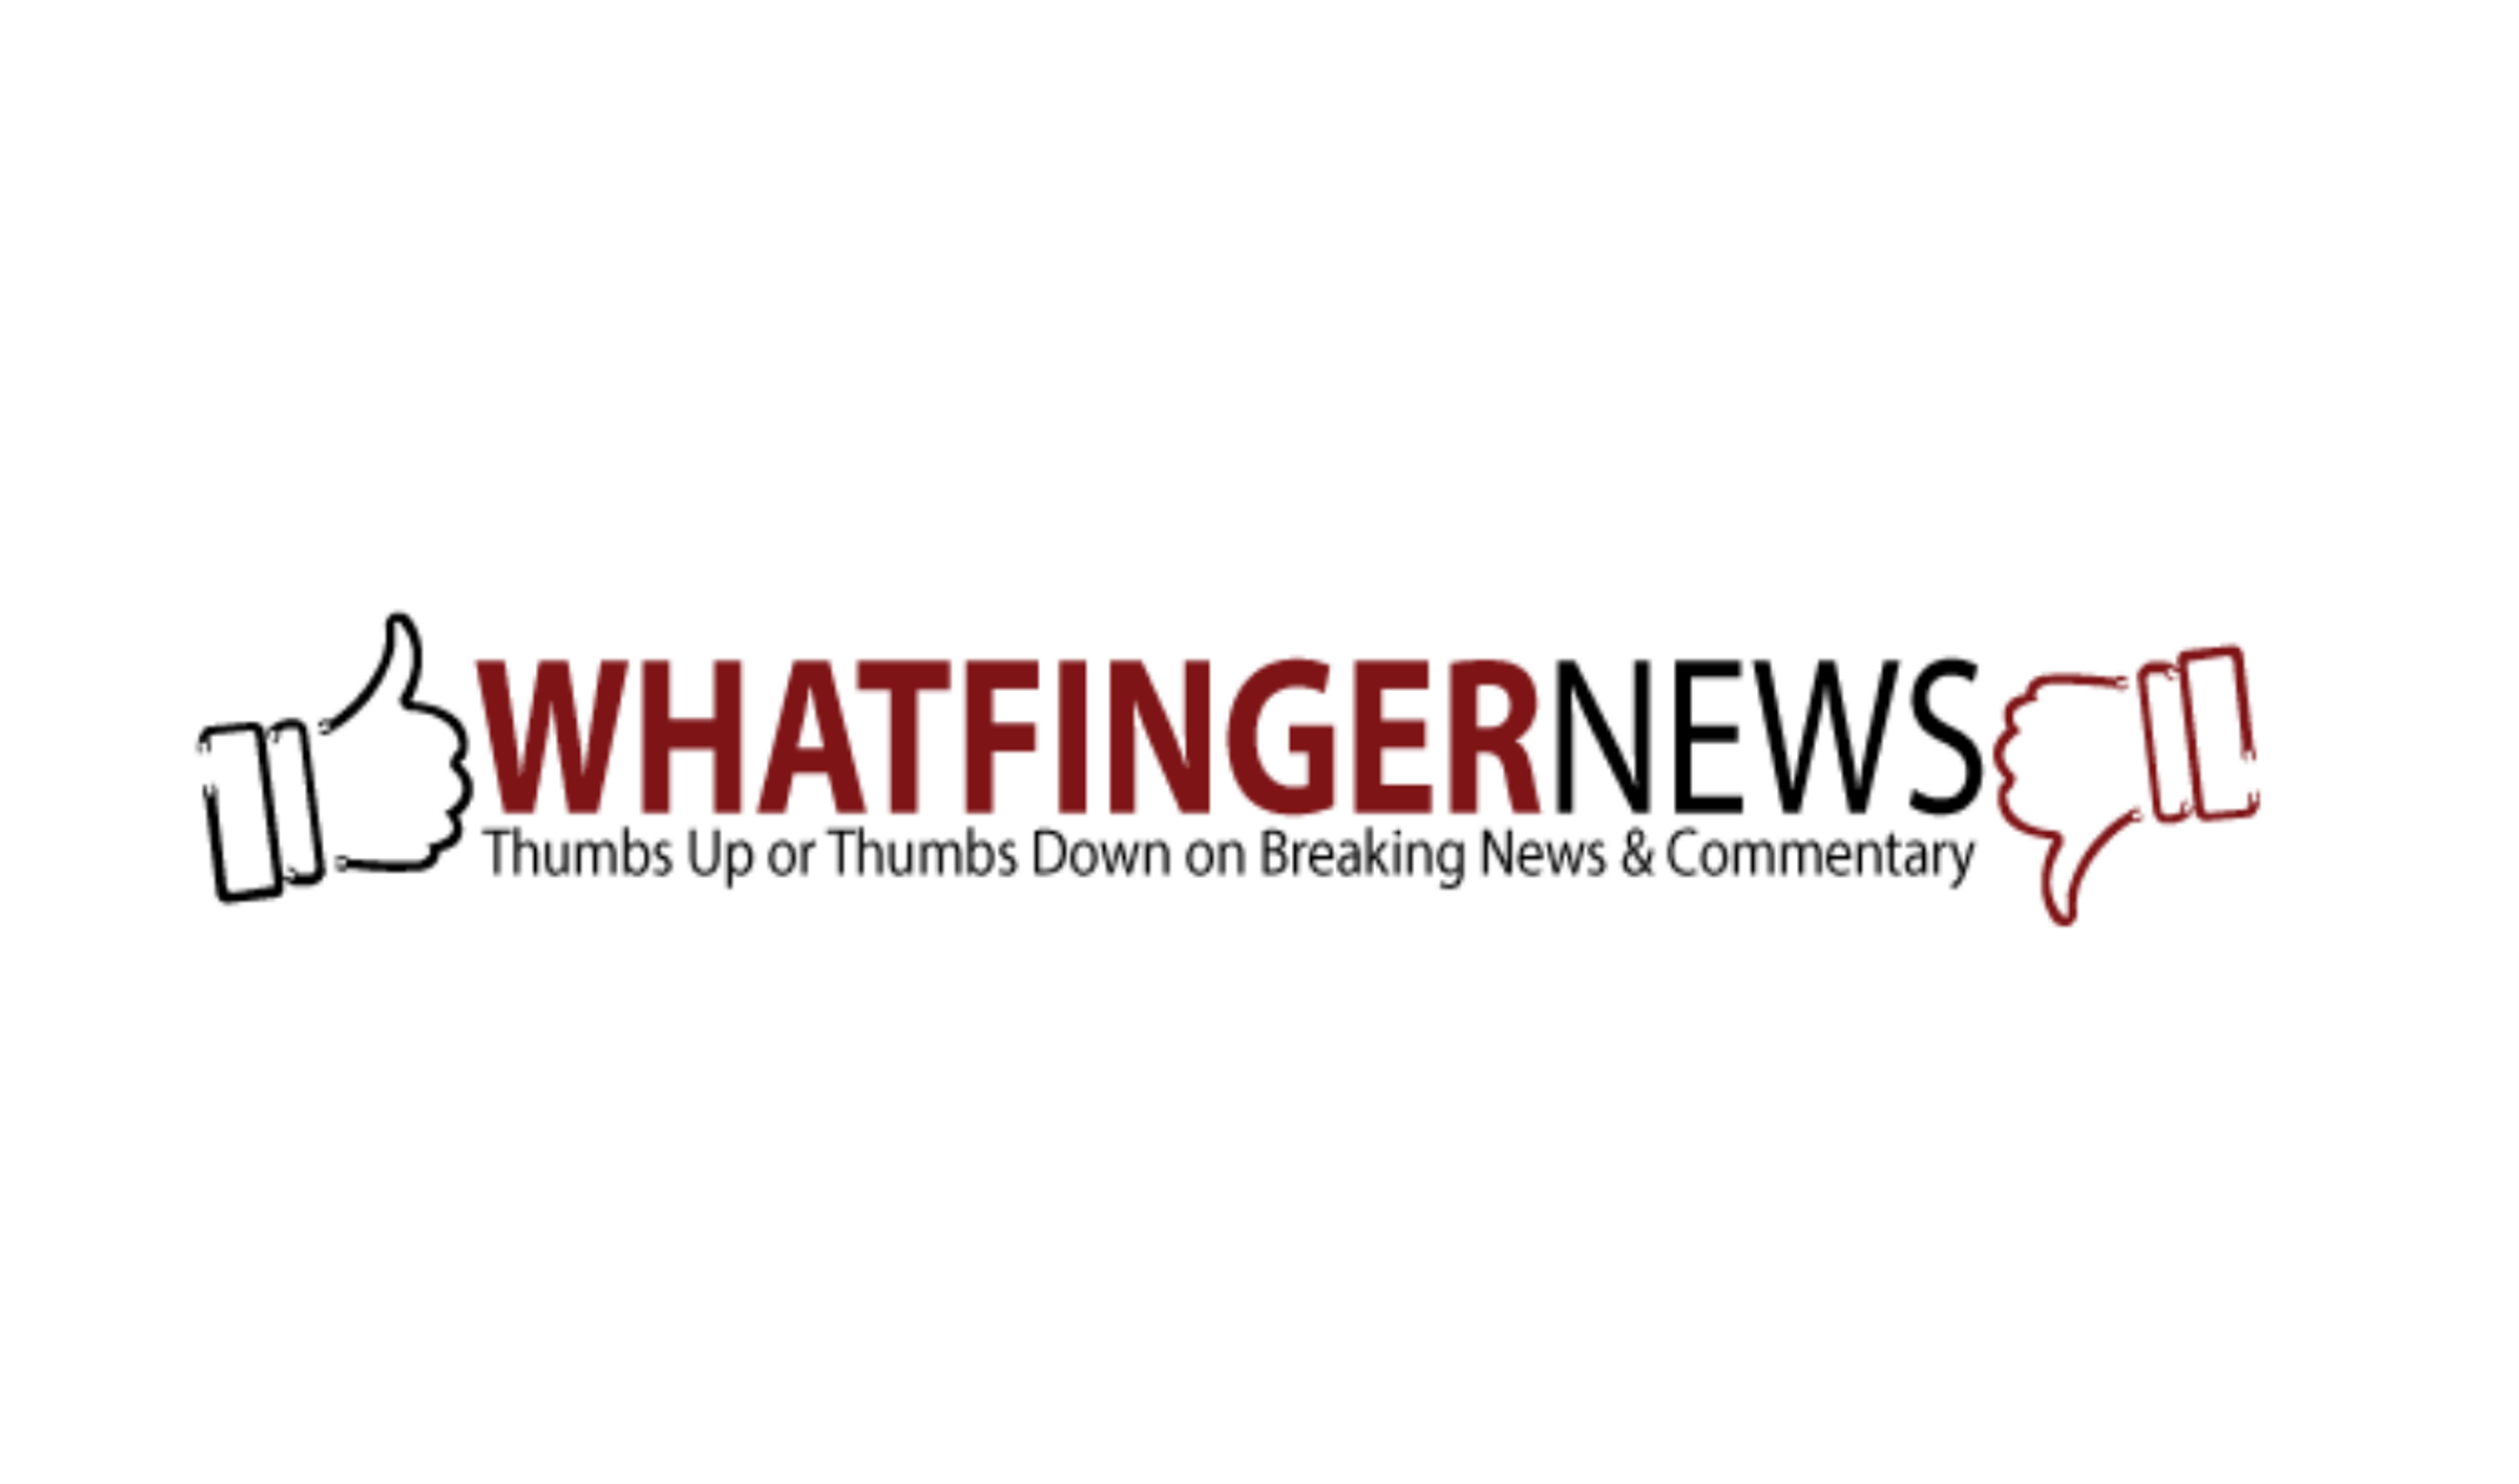 Whatfinger News: Hub Of Latest Local News